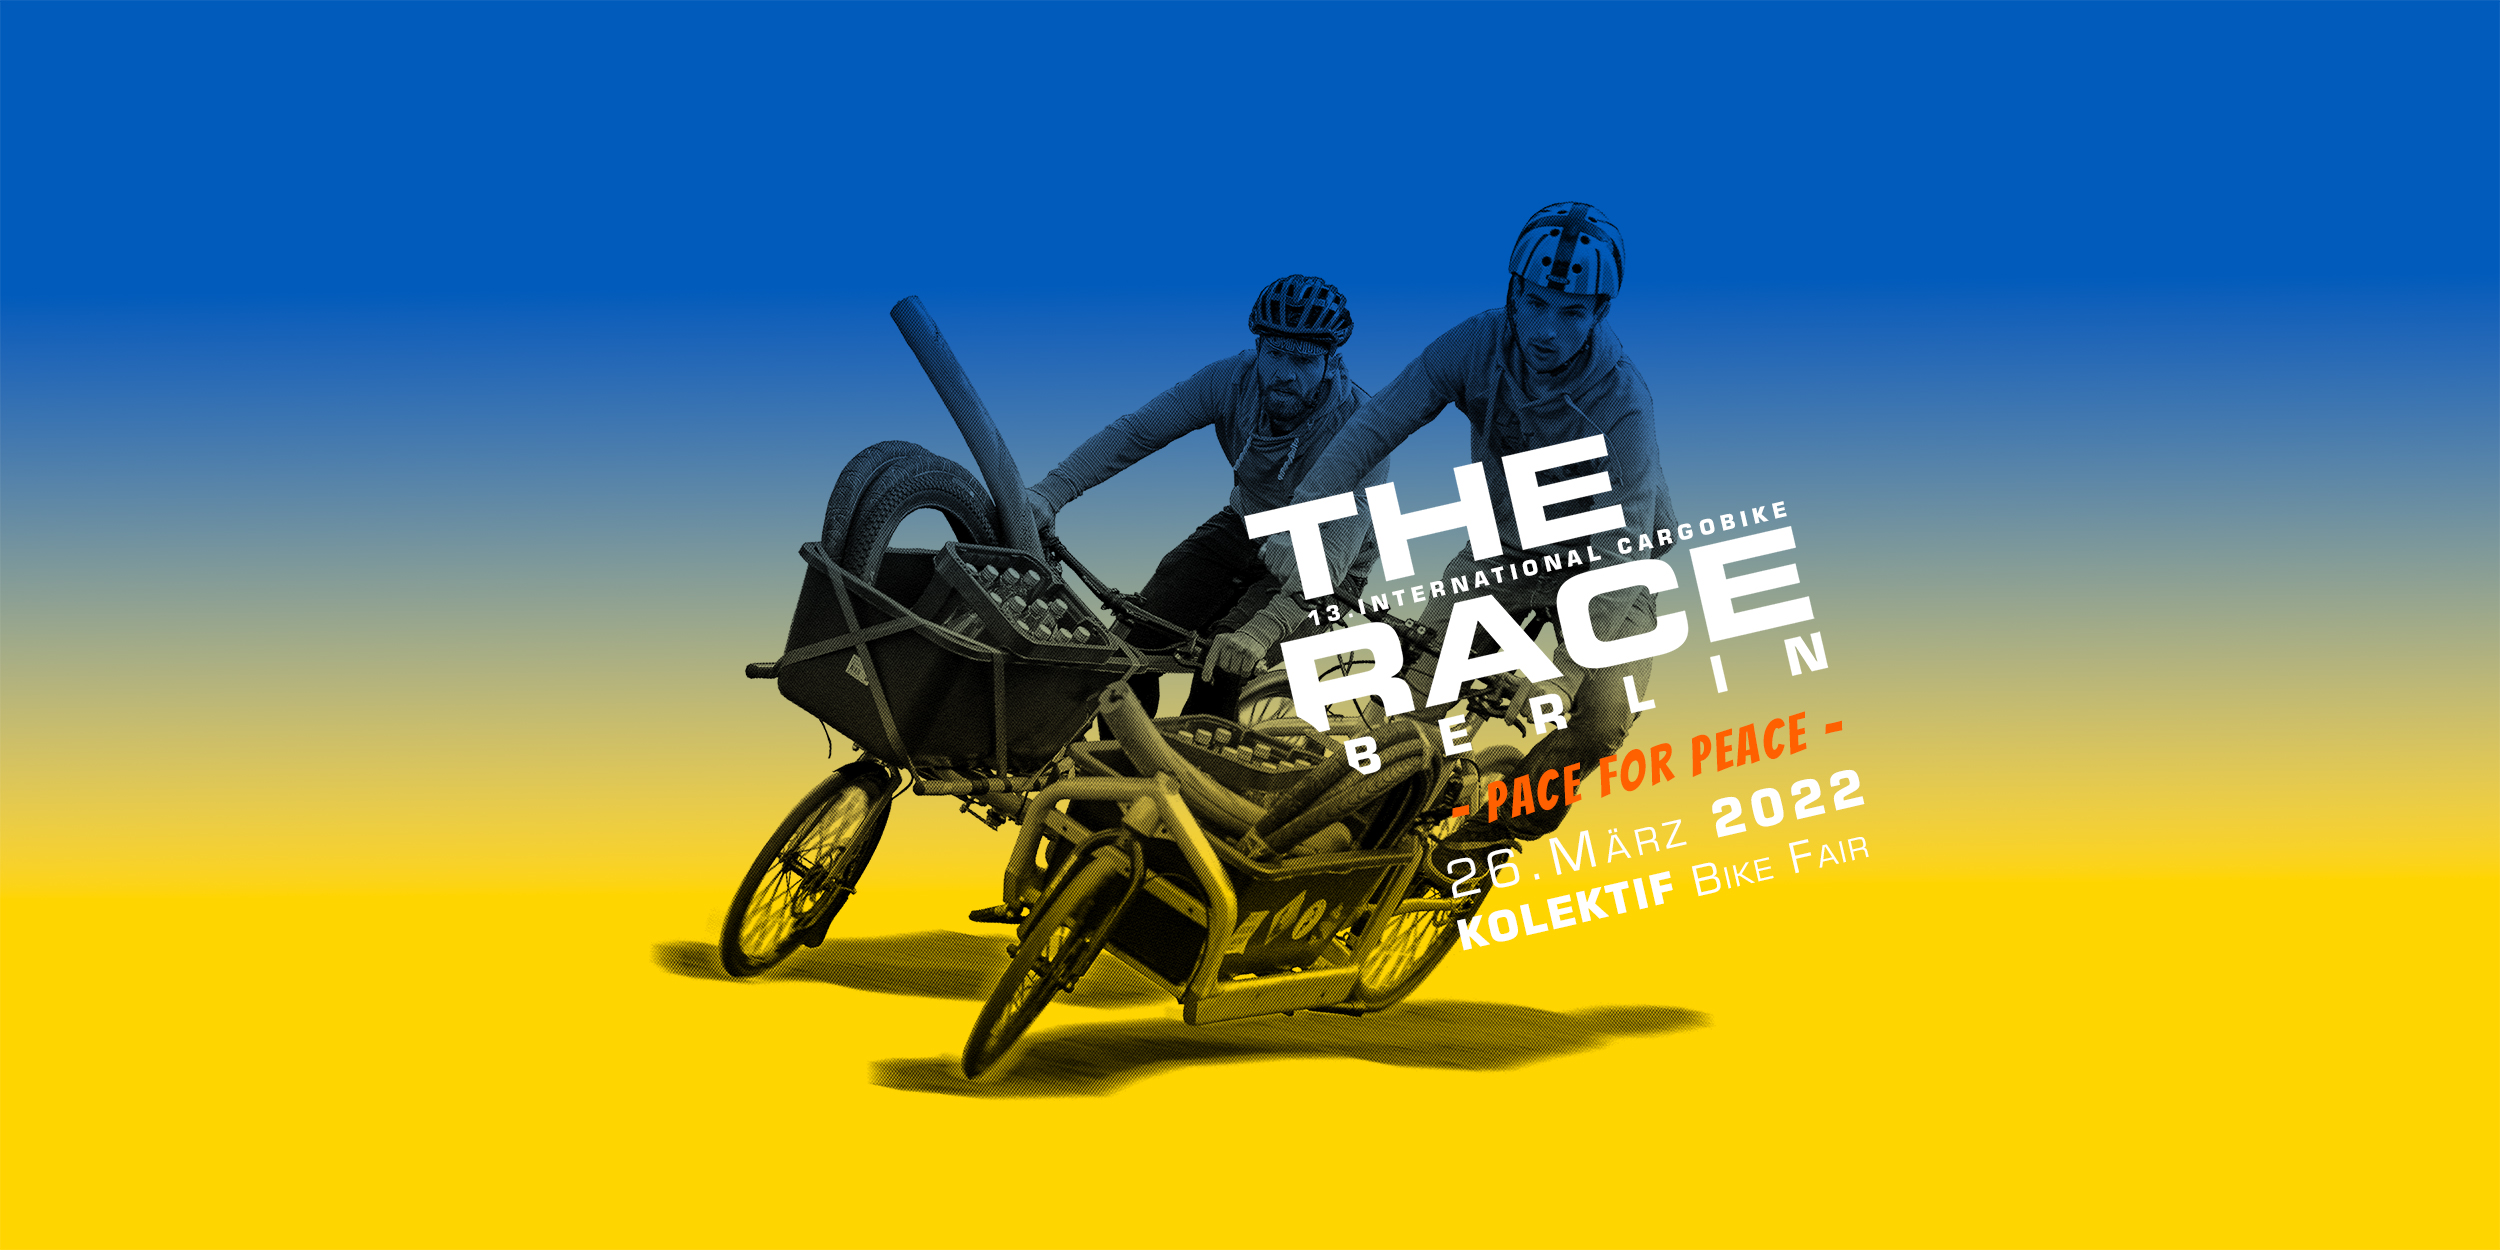 13. Int. Berlin Cargo Bike Race 2022 - Pace for Peace